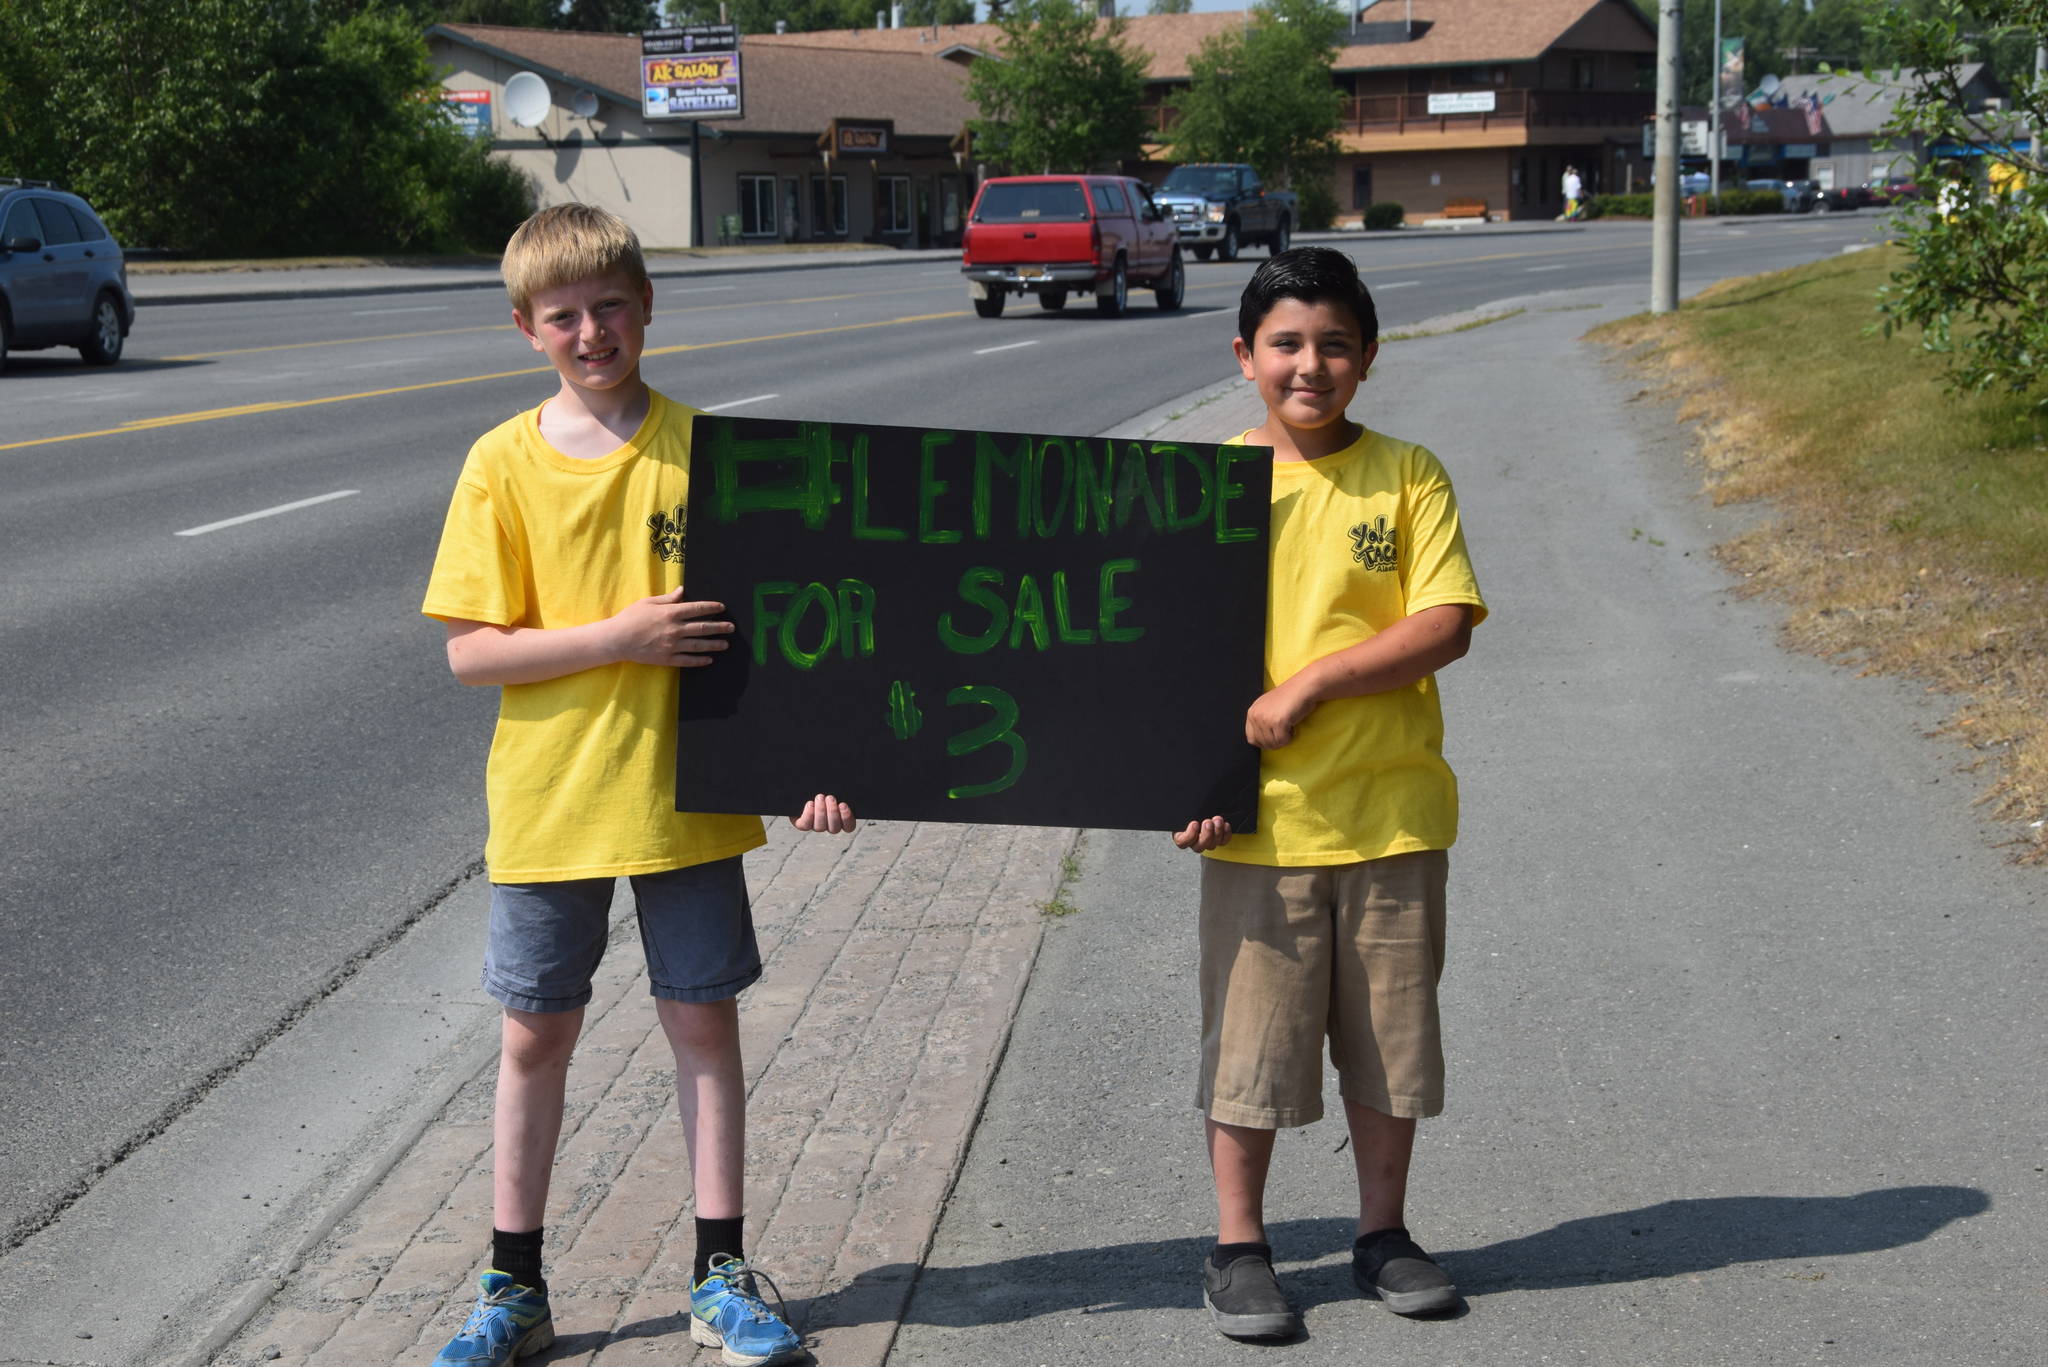 Tucker Challans, left, and Logan Amaya, right, advertise their lemonade business along the Kenai Spur Highway during Lemonade Day in Soldotna, Alaska on June 29, 2019. (Photo by Brian Mazurek/Peninsula Clarion)